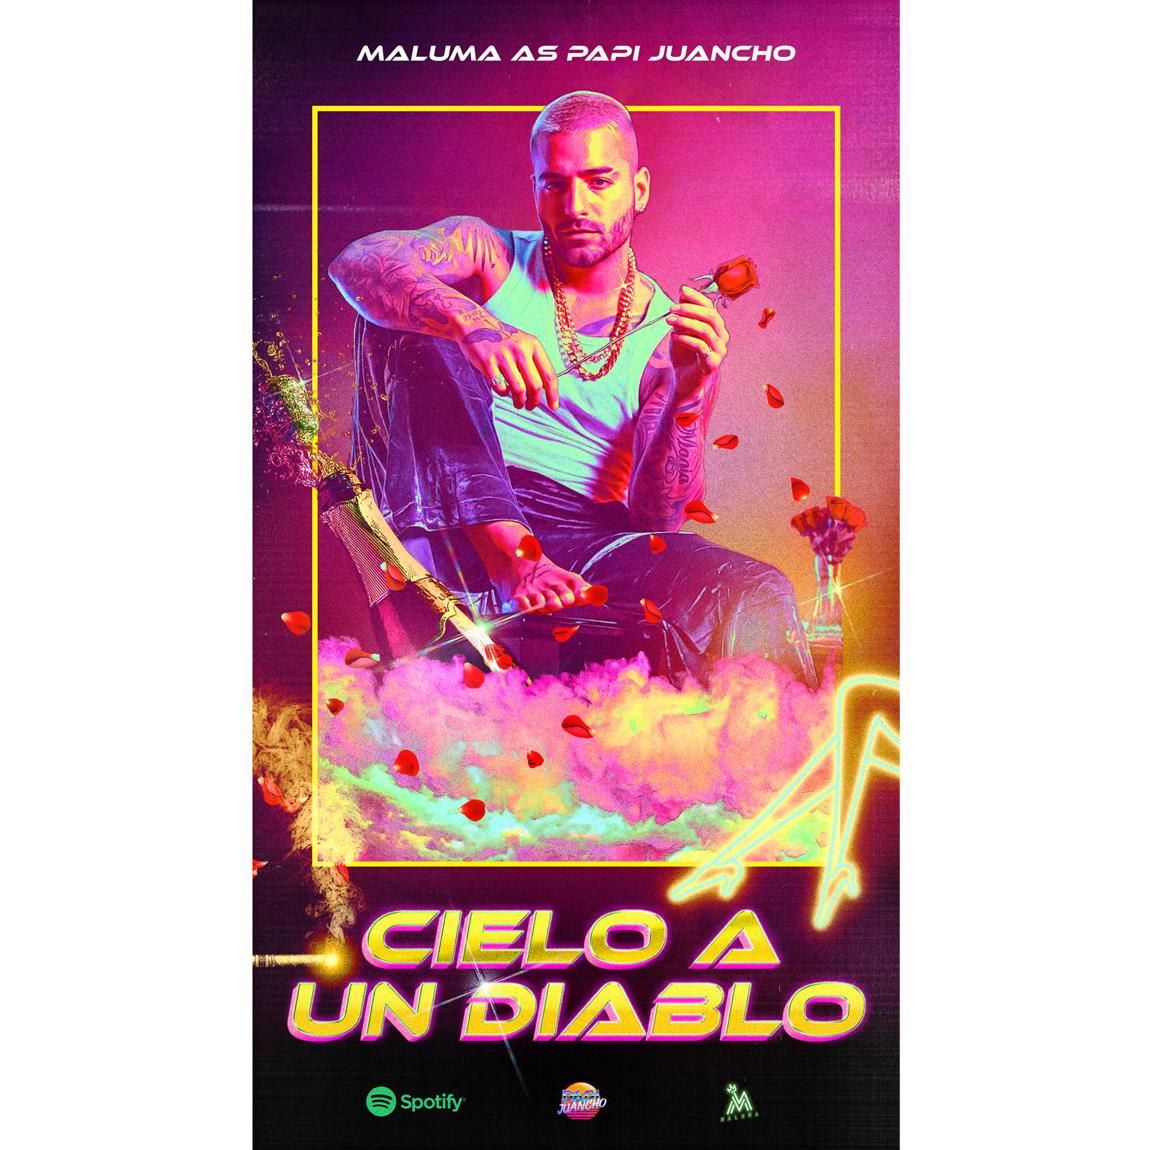 Maluma dropped his new album ‘Papi Juancho’ on Aug. 21